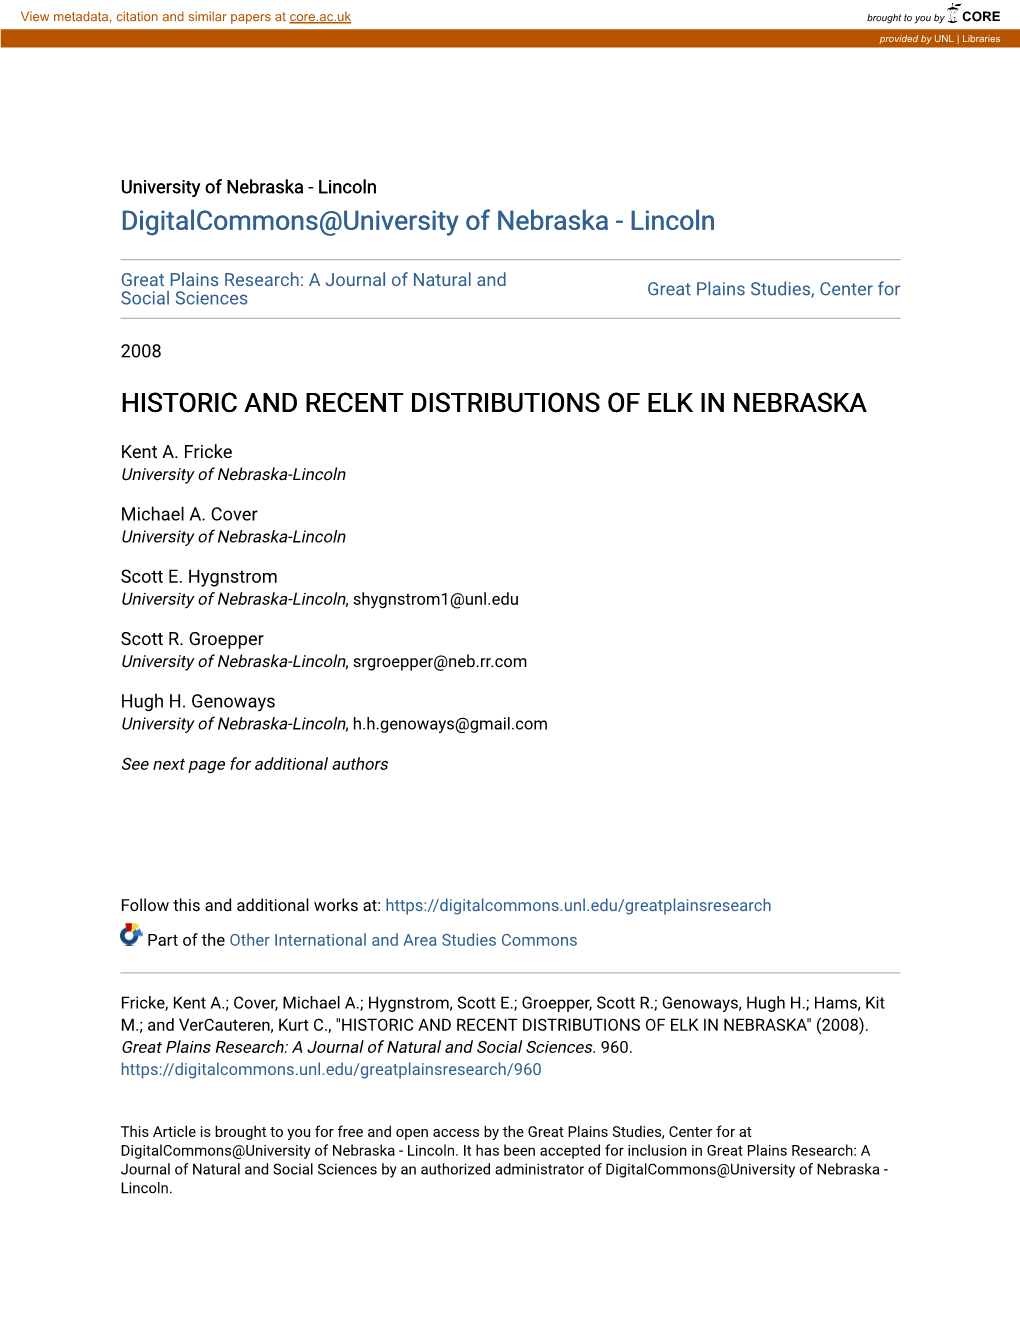 Historic and Recent Distributions of Elk in Nebraska